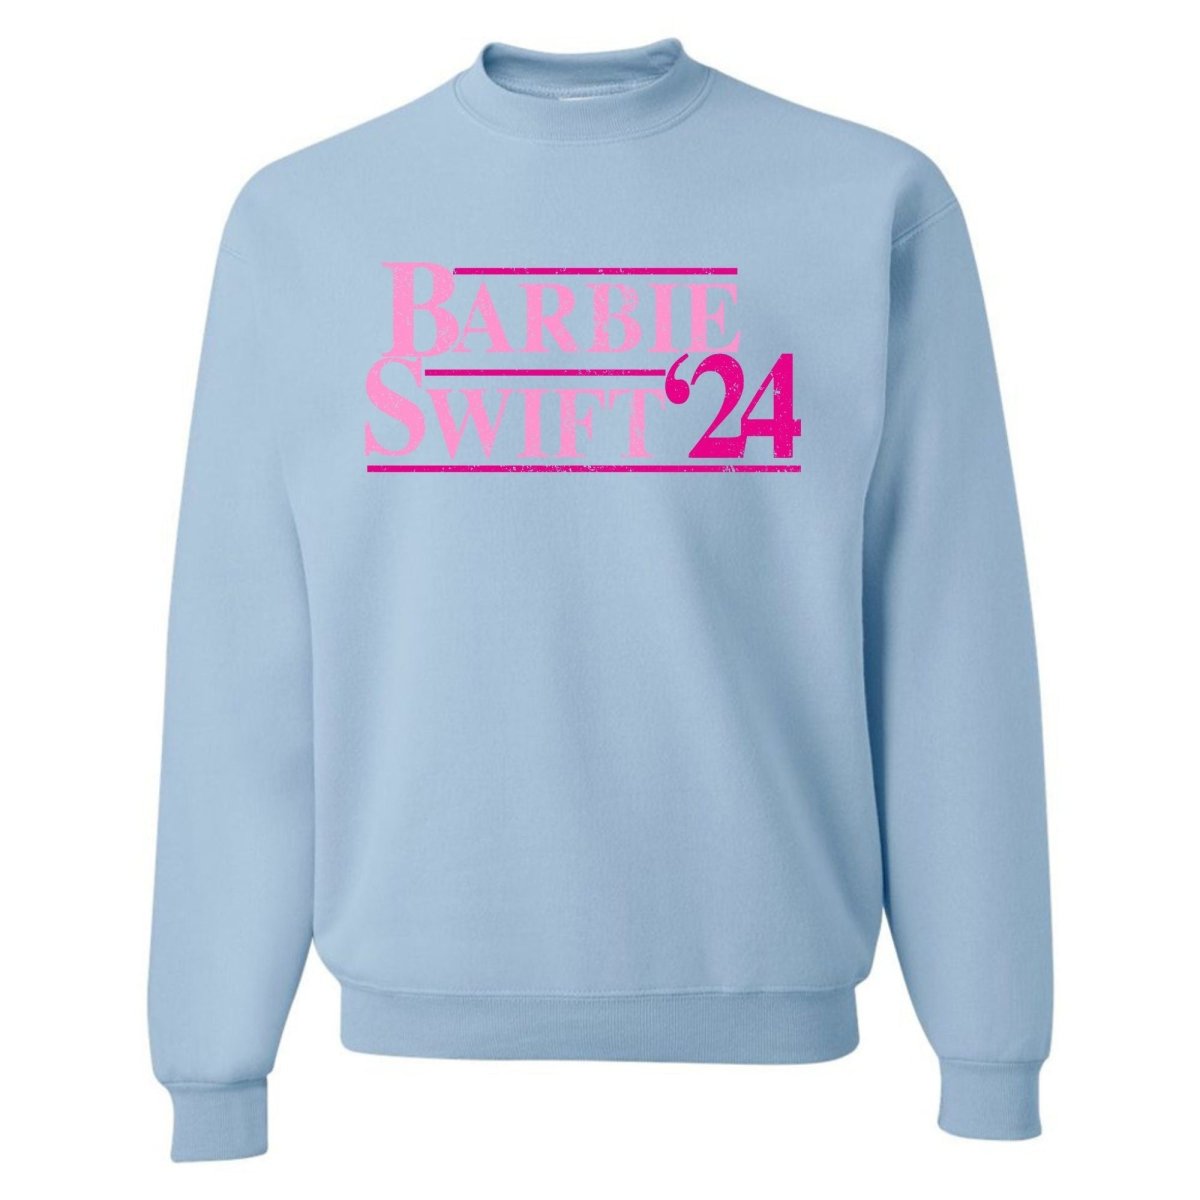 'Girly Campaign '24' Crewneck Sweatshirt - United Monograms